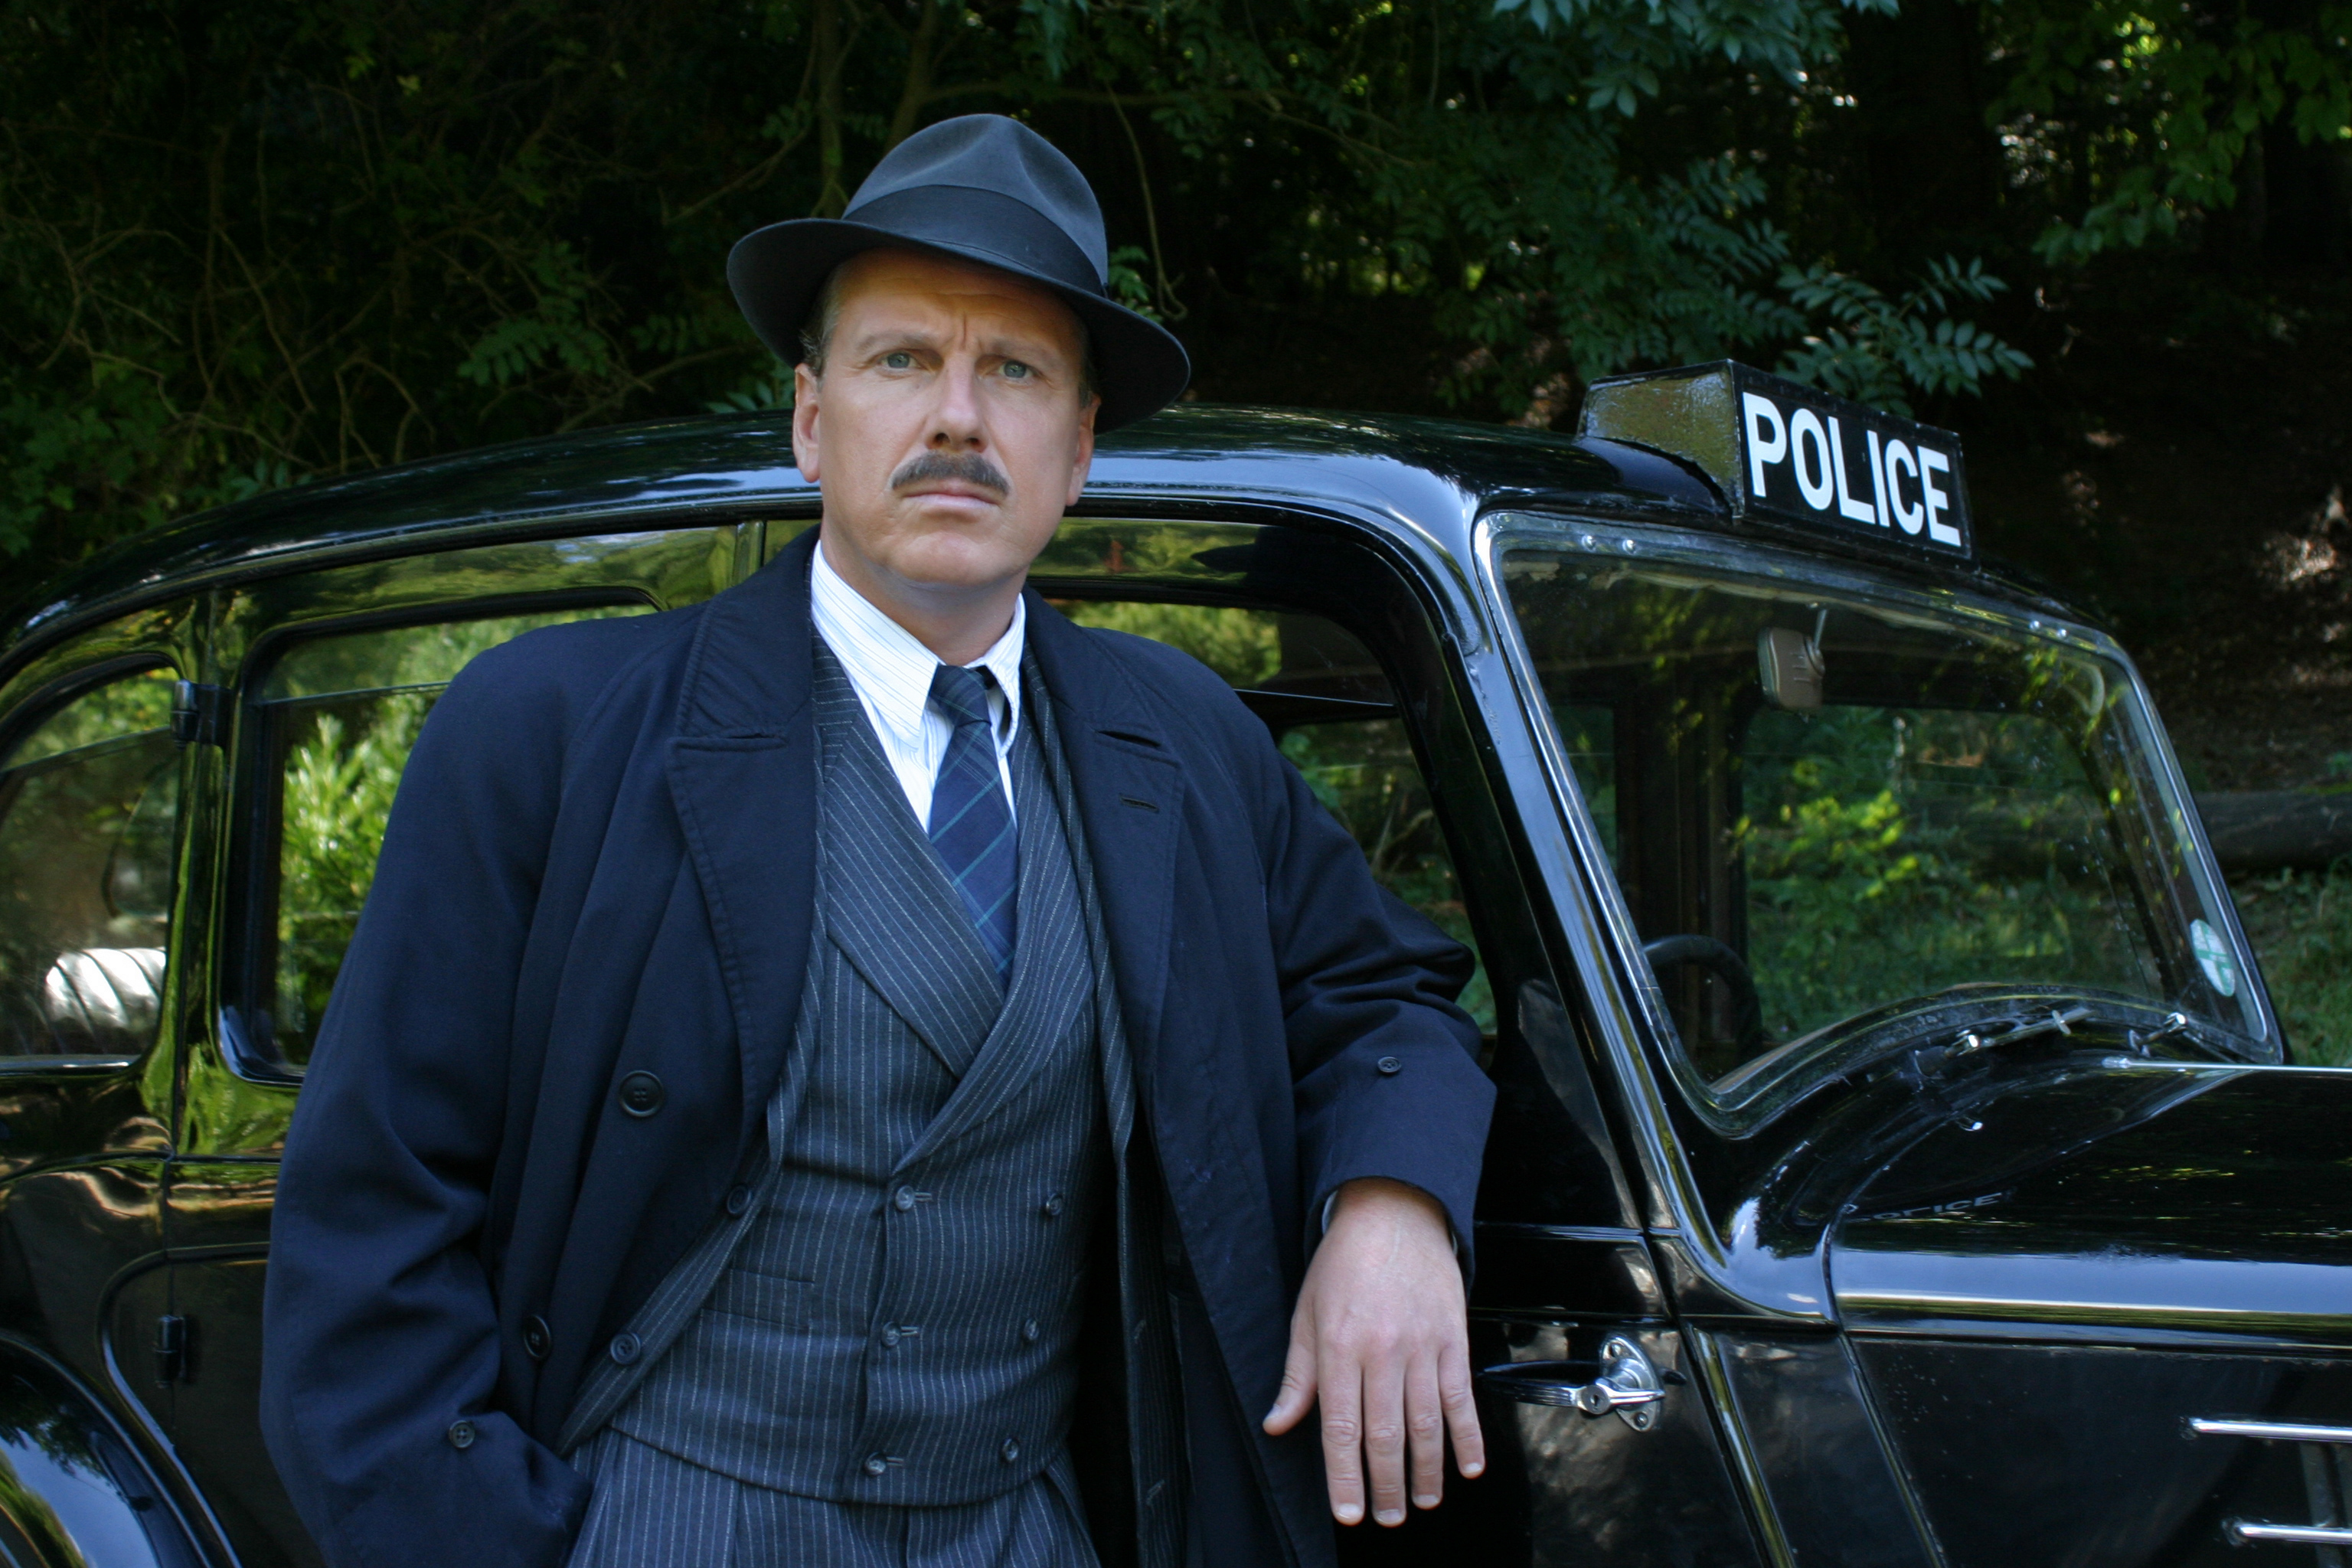 David Westhead as Superintendent Jim Wheeler In Poirot